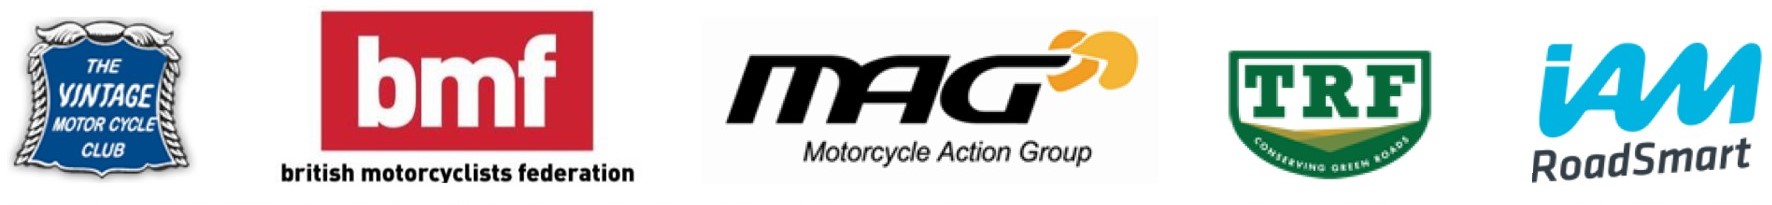 Motorcycle Action Group coalition logos_May 20